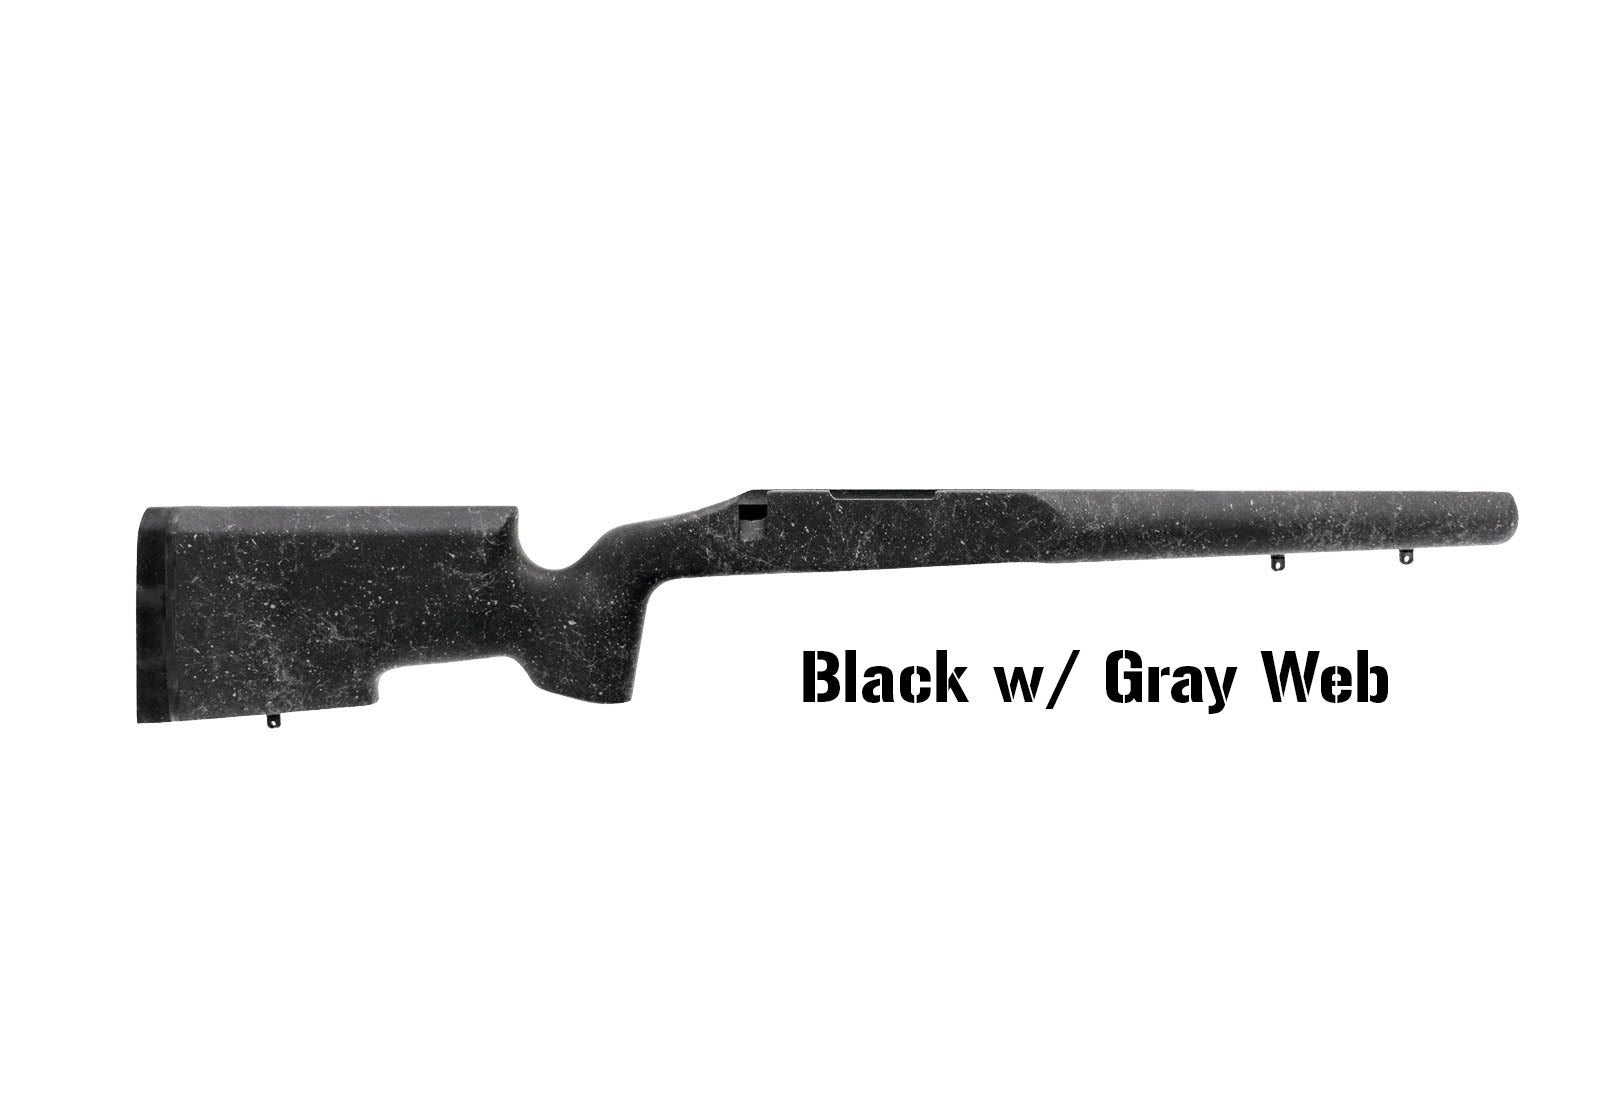 Renegade - Right Hand Rem 700 Short action, M5, Remington Varmint/Sendero barrel.  Painted Black w/ Gray Web